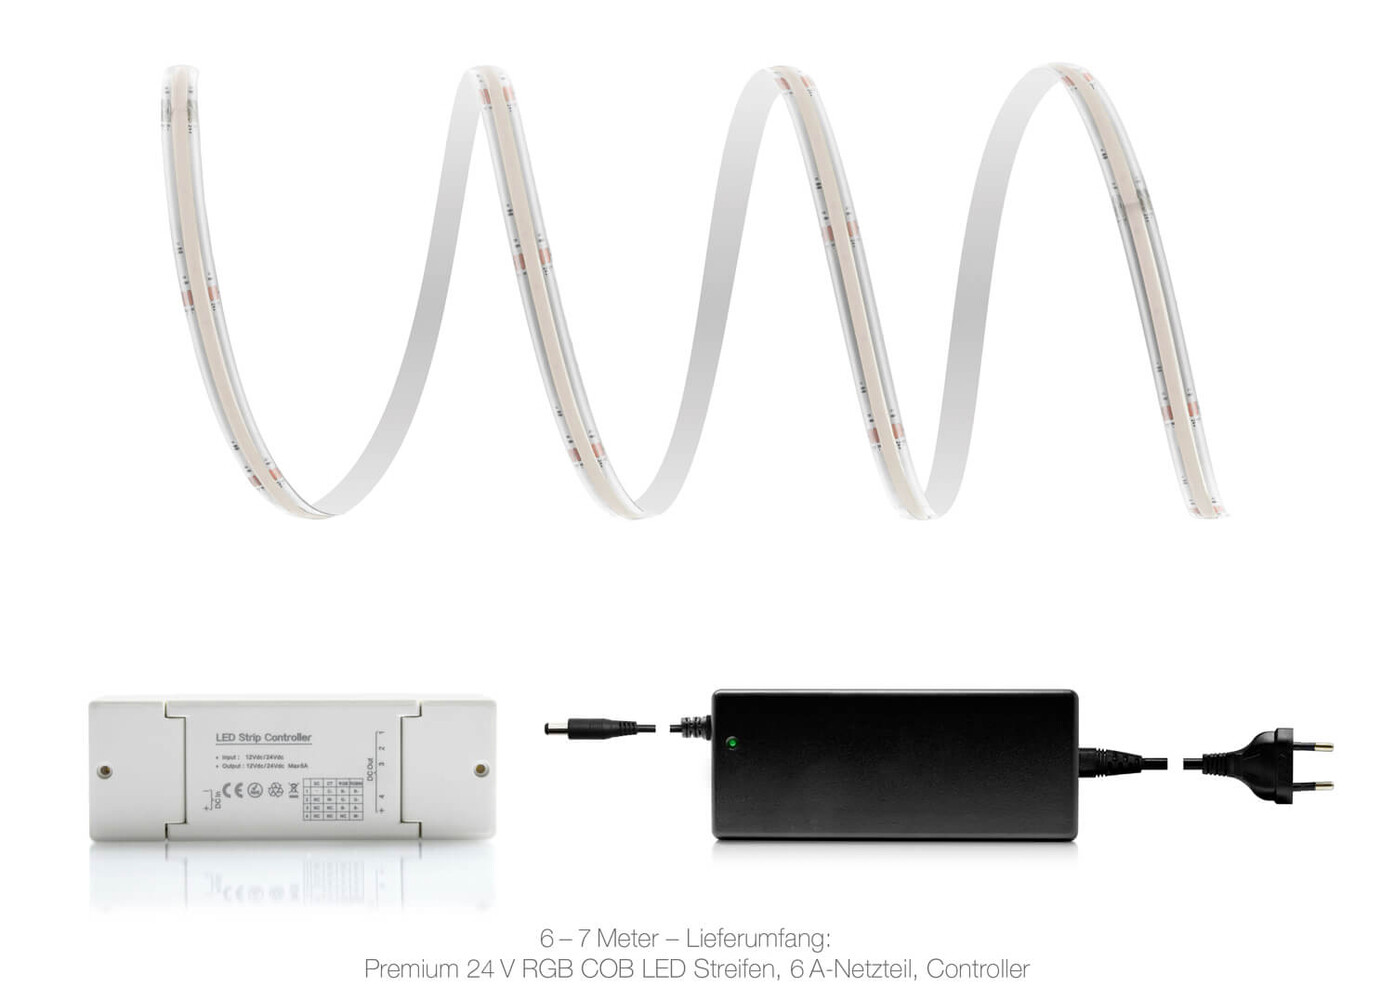 Hochwertiger, leuchtstarker 24V RGB COB LED Streifen im IP65 Smart Home Set von LED Universum